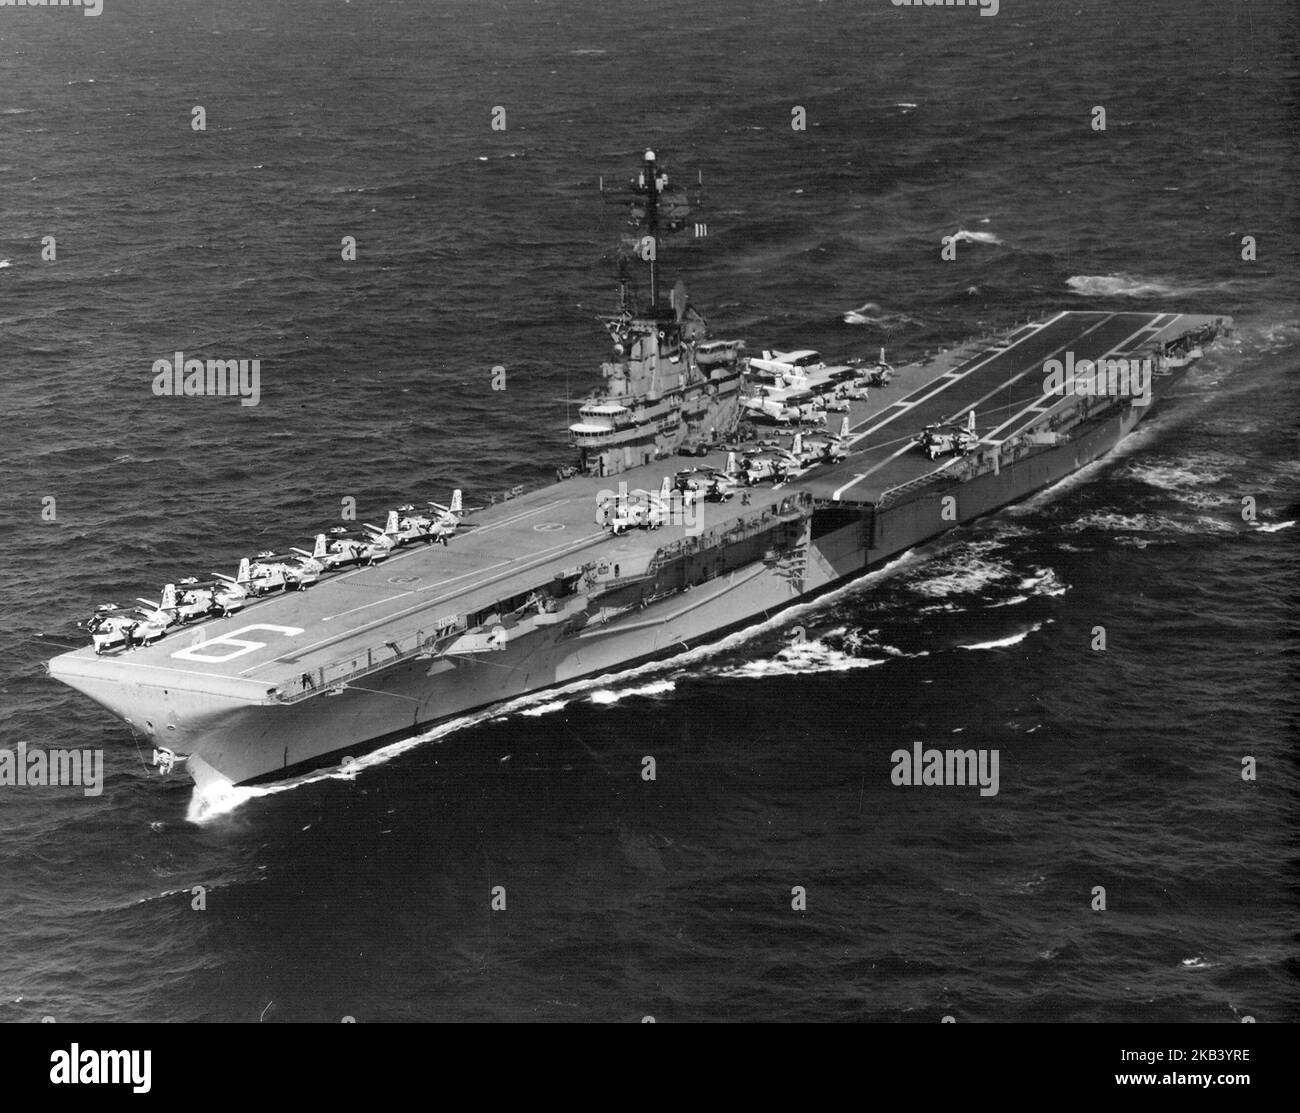 The U.S. Navy aircraft carrier USS Essex (CVS-9) underway in the Atlantic Ocean 1967 Stock Photo